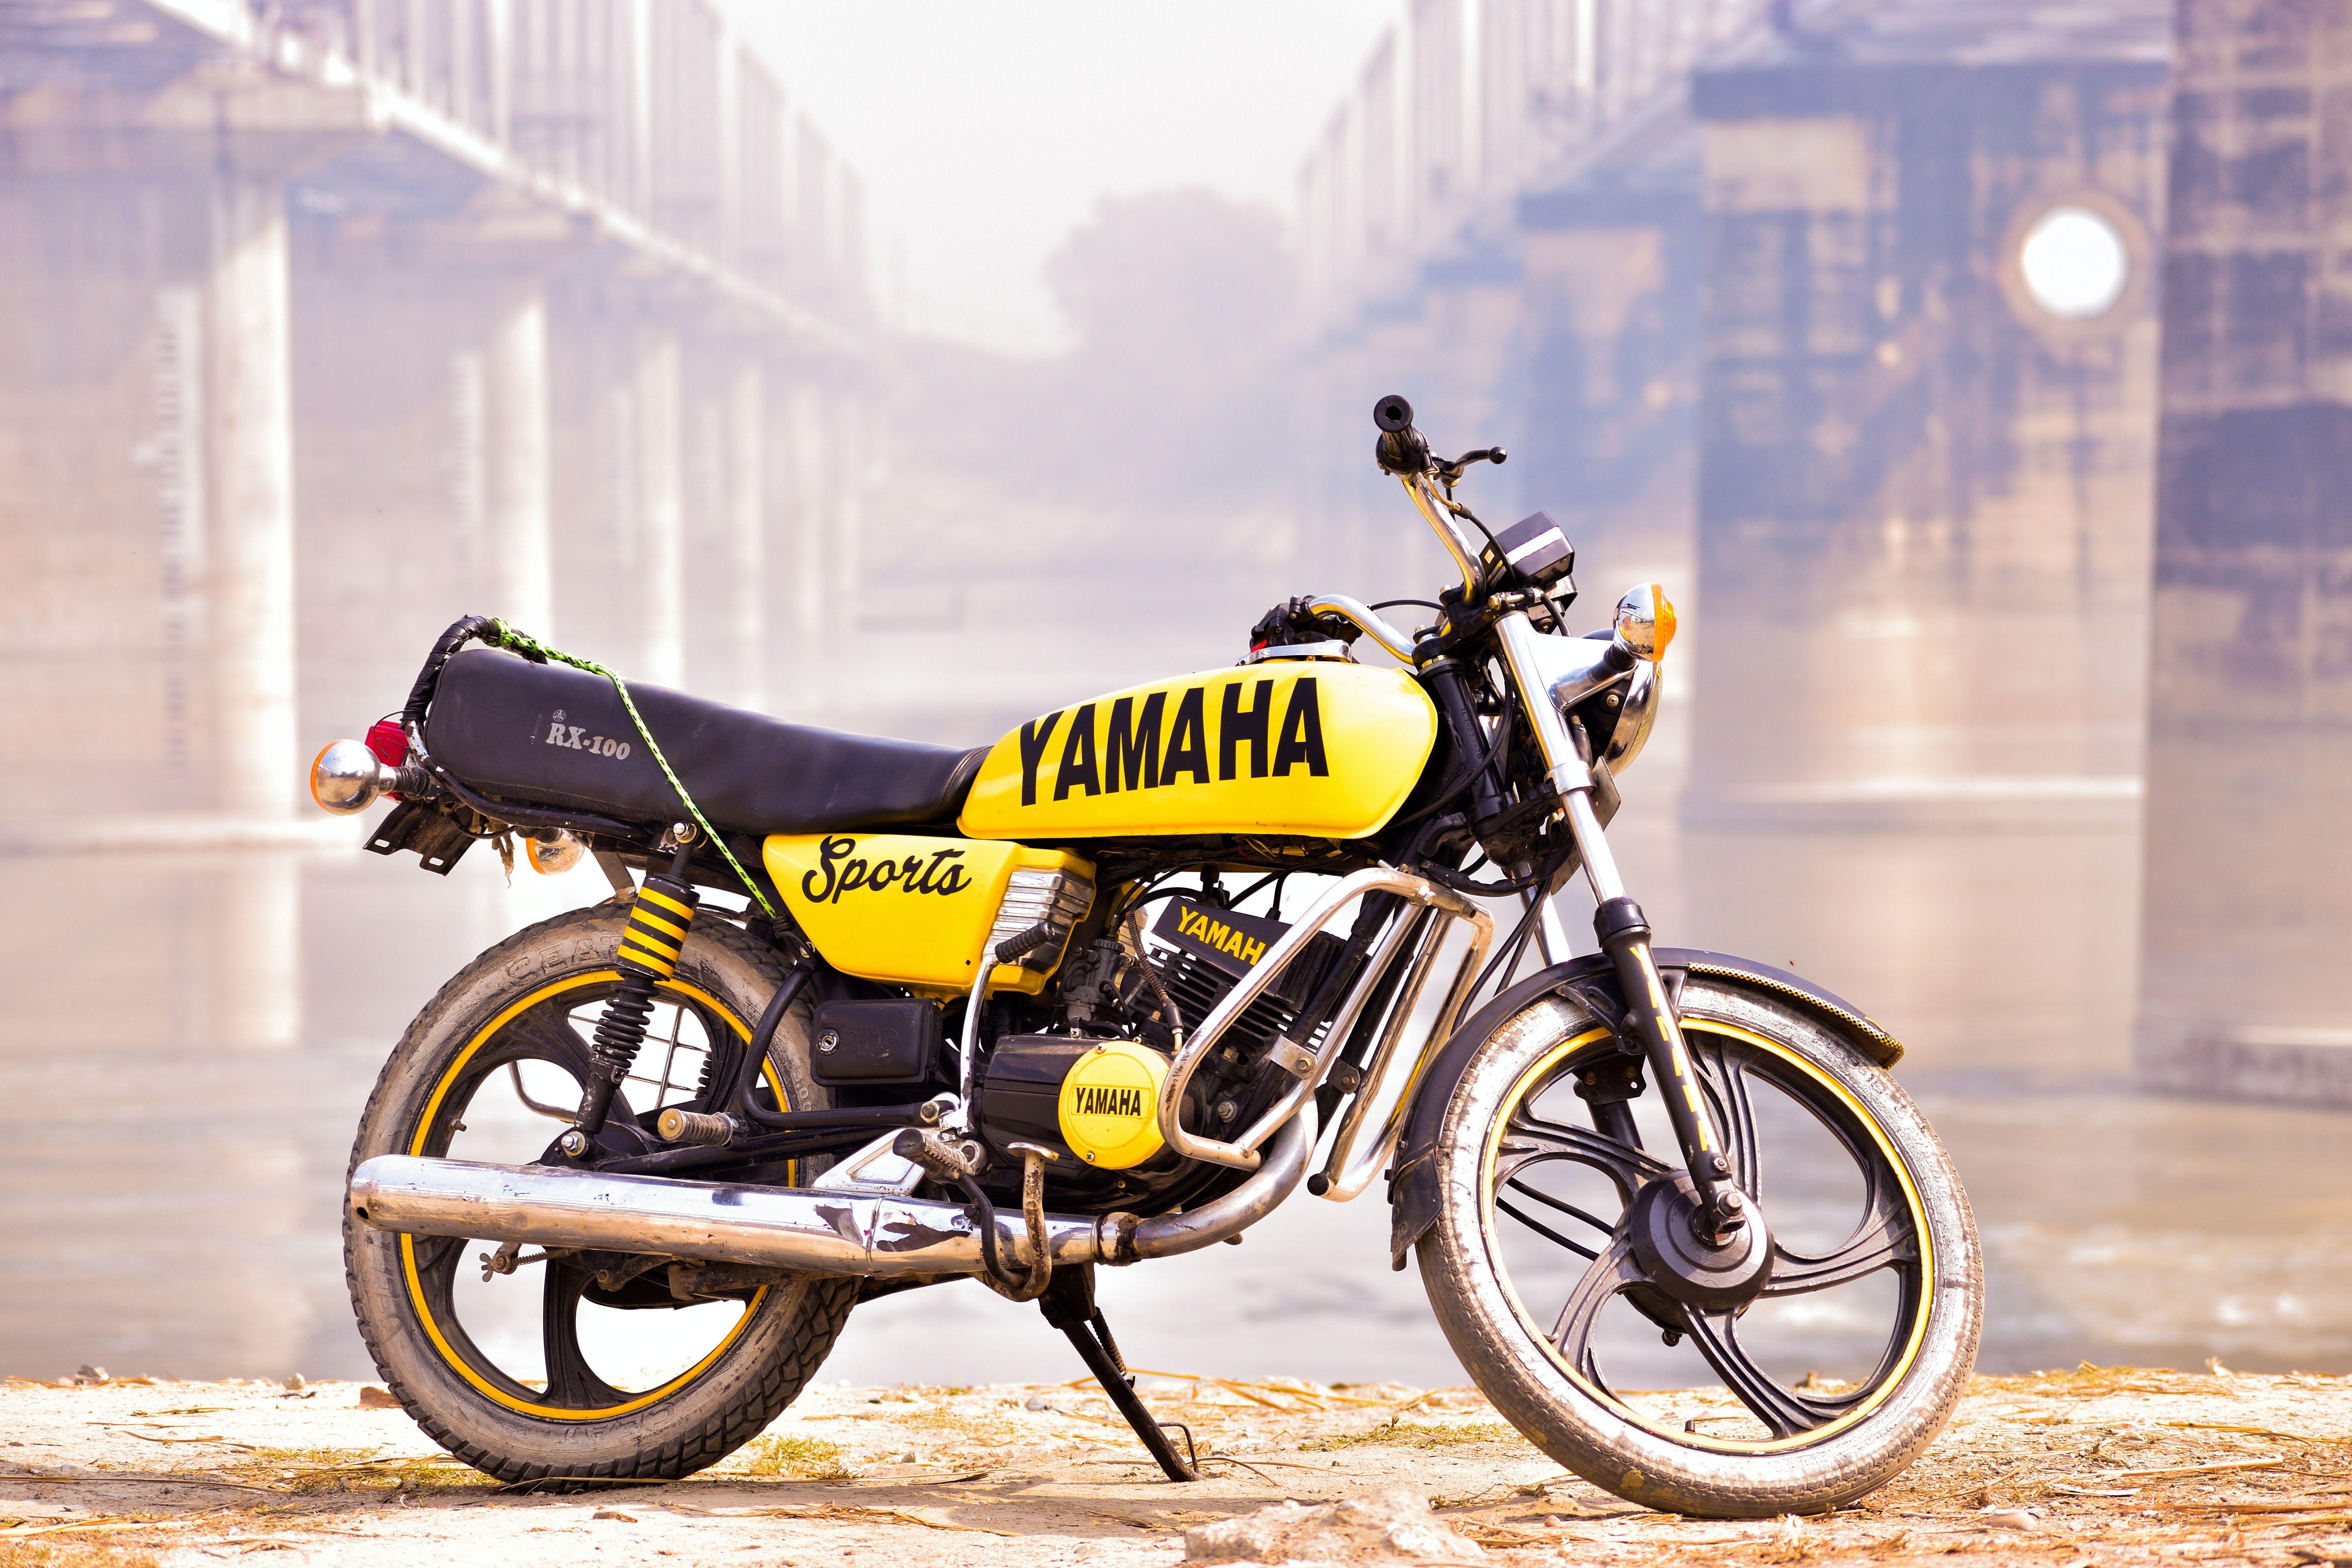 Yamaha Rx100 Hd Images Download لم يسبق له مثيل الصور Tier3 Xyz